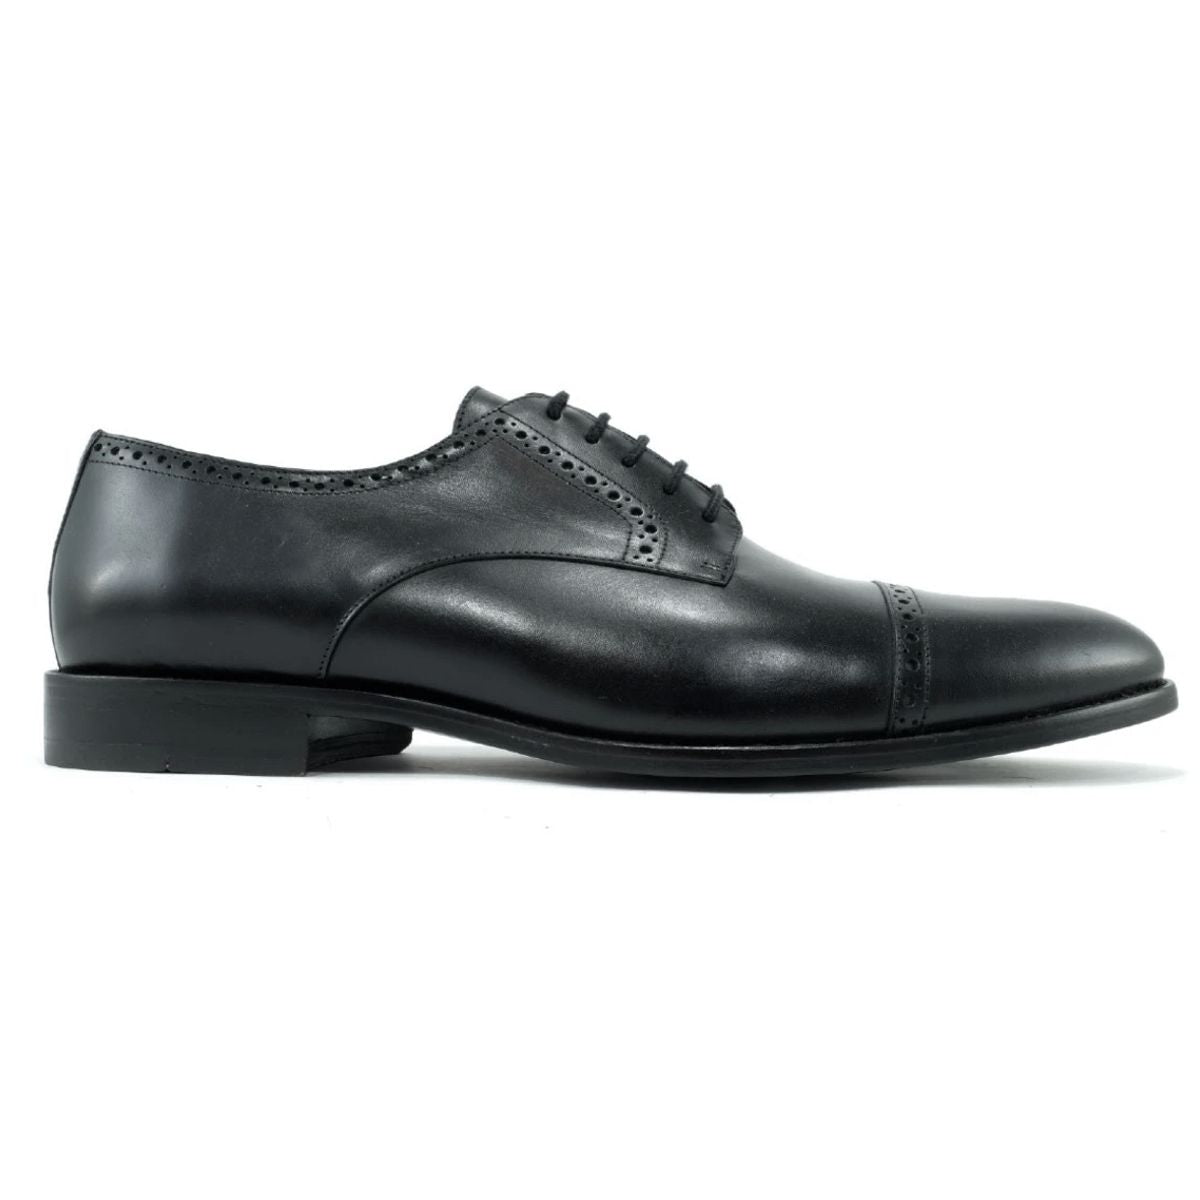 Cambridge Calfskin Cap-Toe Oxford in Black by Alan Payne Footwear